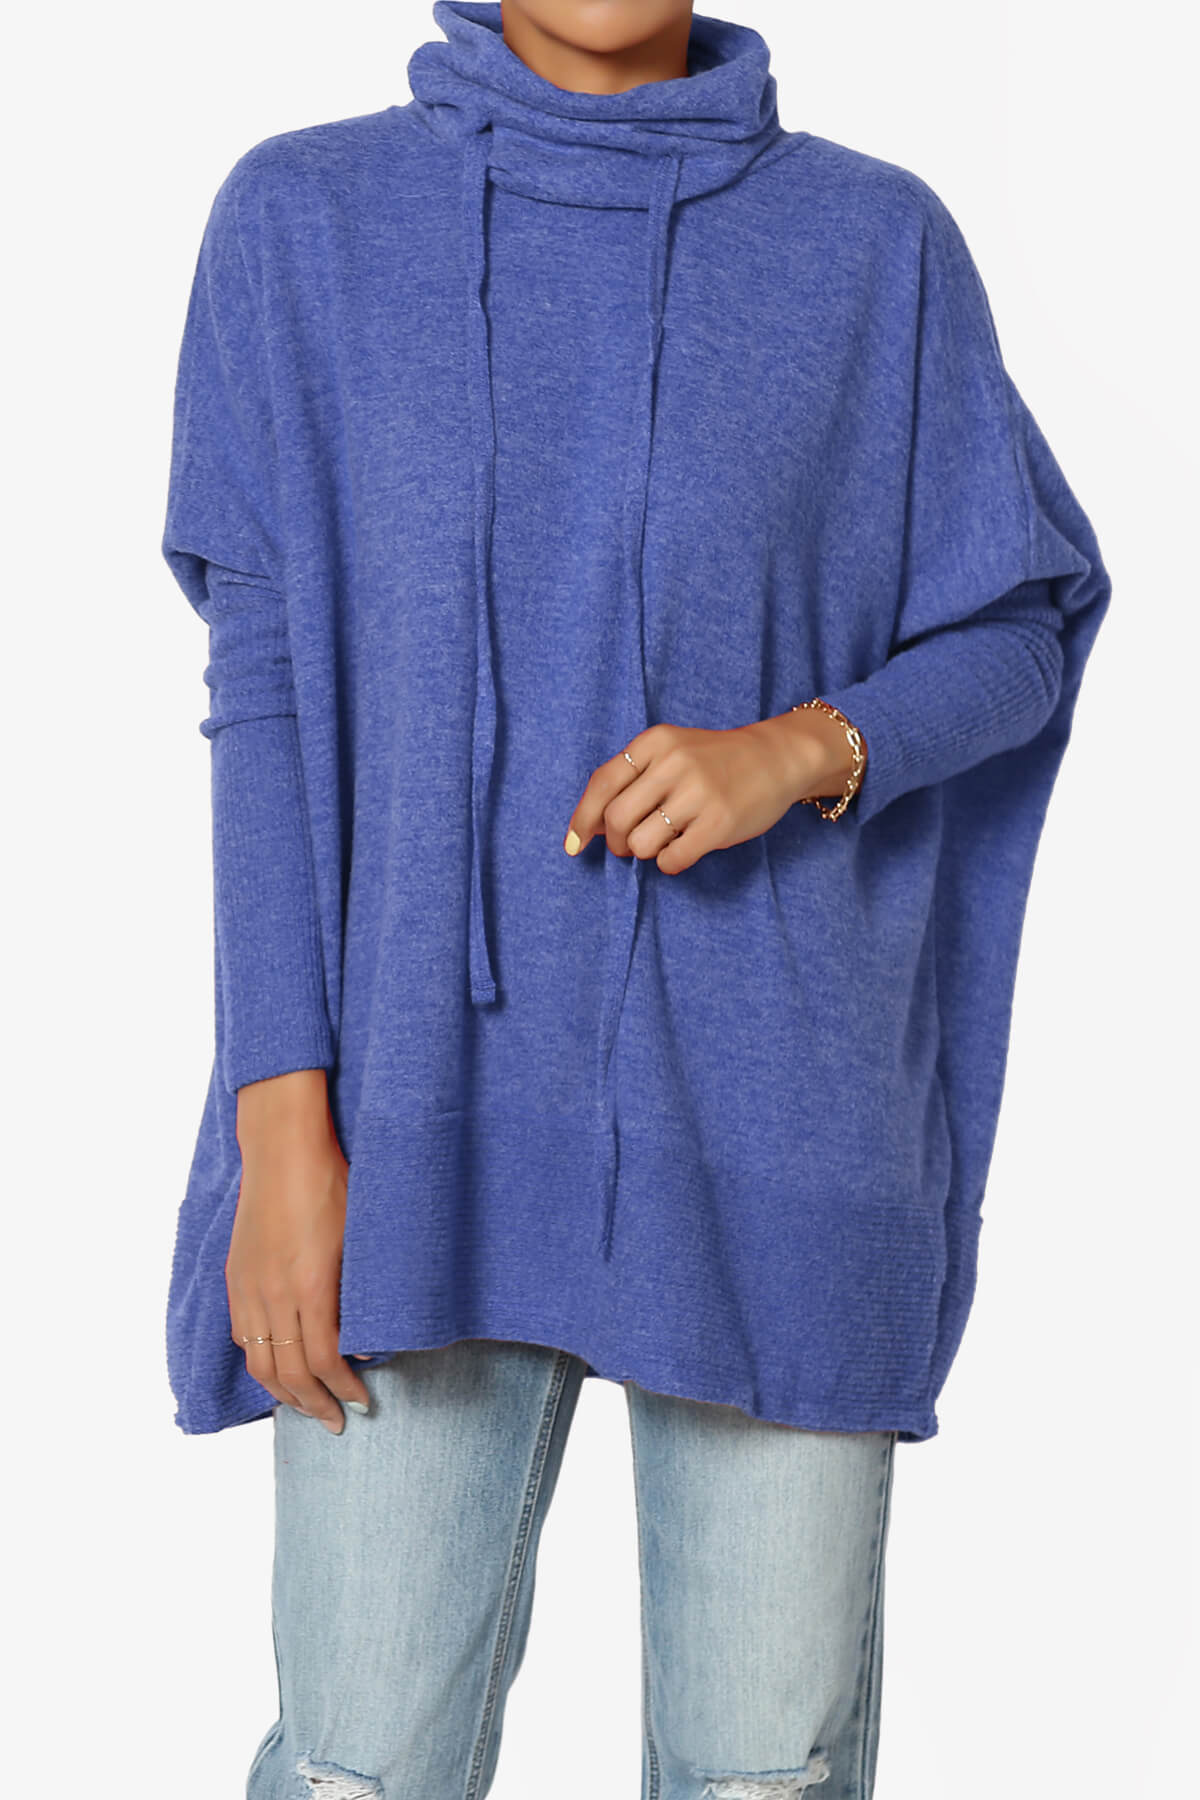 Barclay Cowl Neck Melange Knit Oversized Sweater BRIGHT BLUE_1